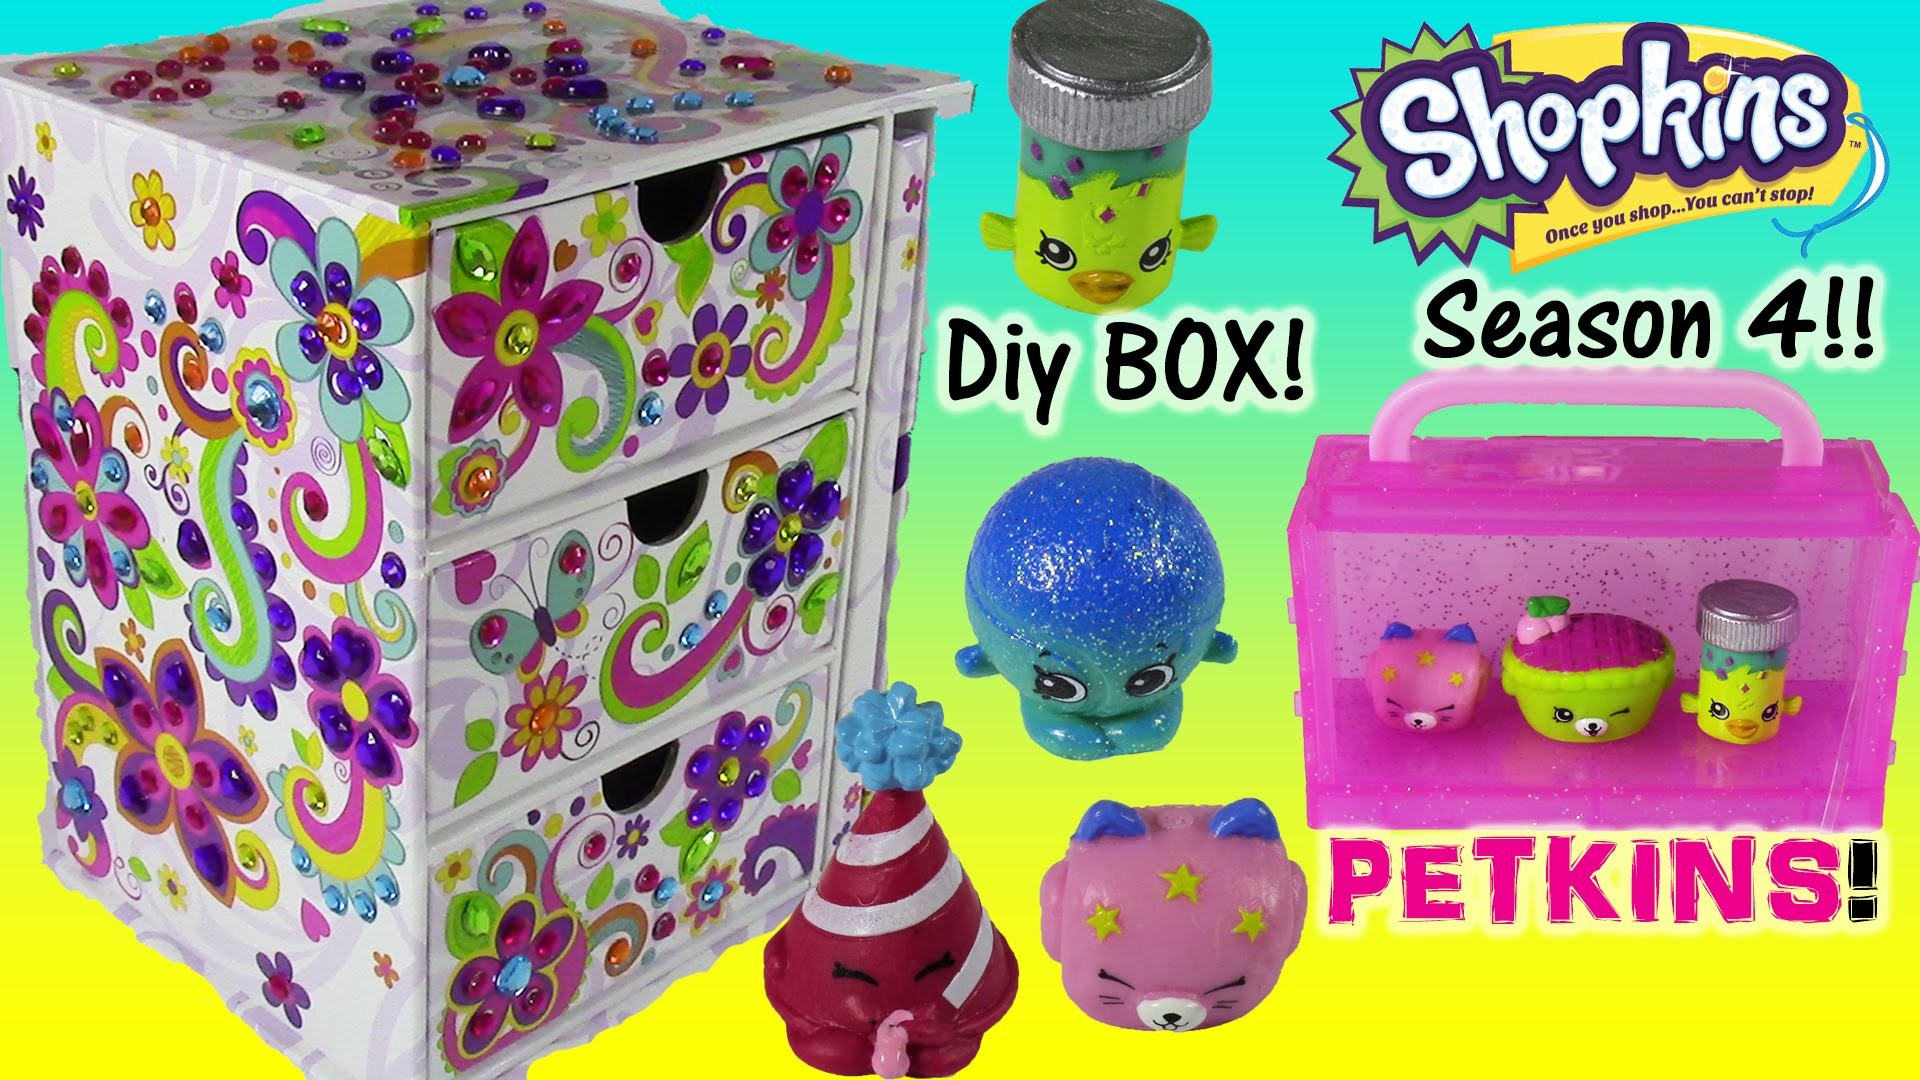 DIY Sticky Gems Jewelry Chest with Secret DIary! SHOPKINS Season 4 Petkins 12 pack! Crafty Fun